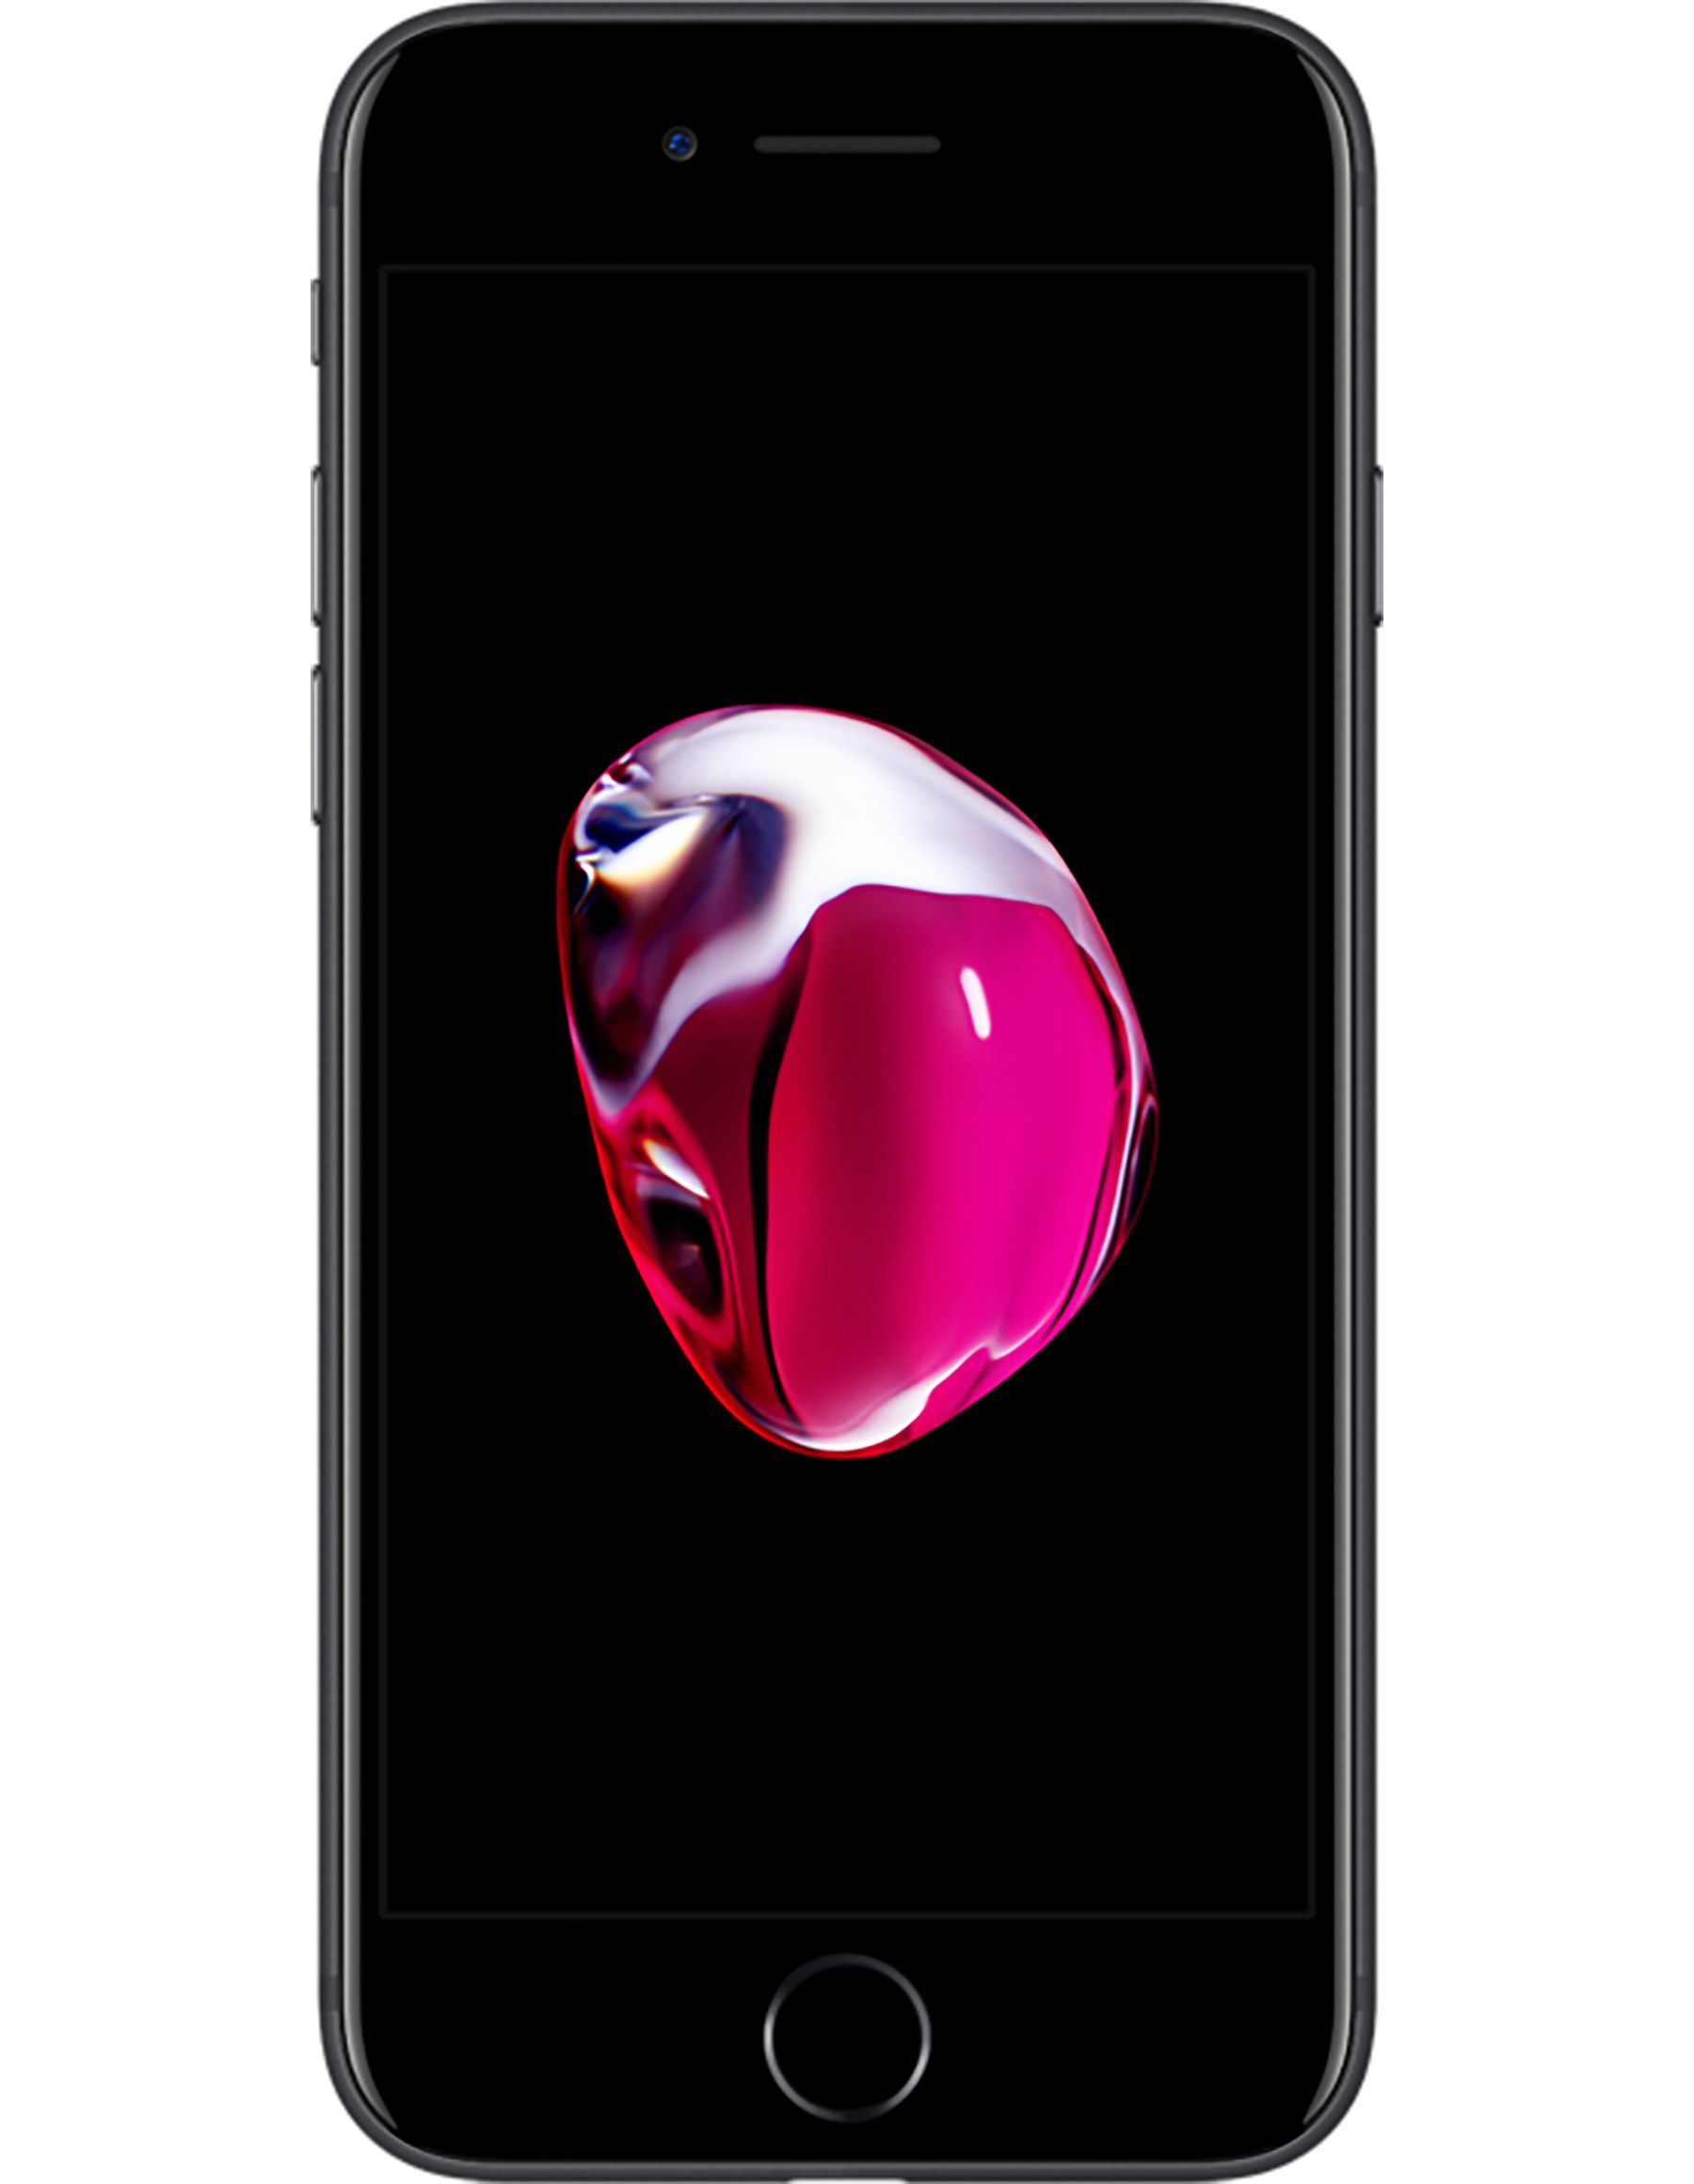 Apple Iphone 7 Deals Contracts Carphone Warehouse